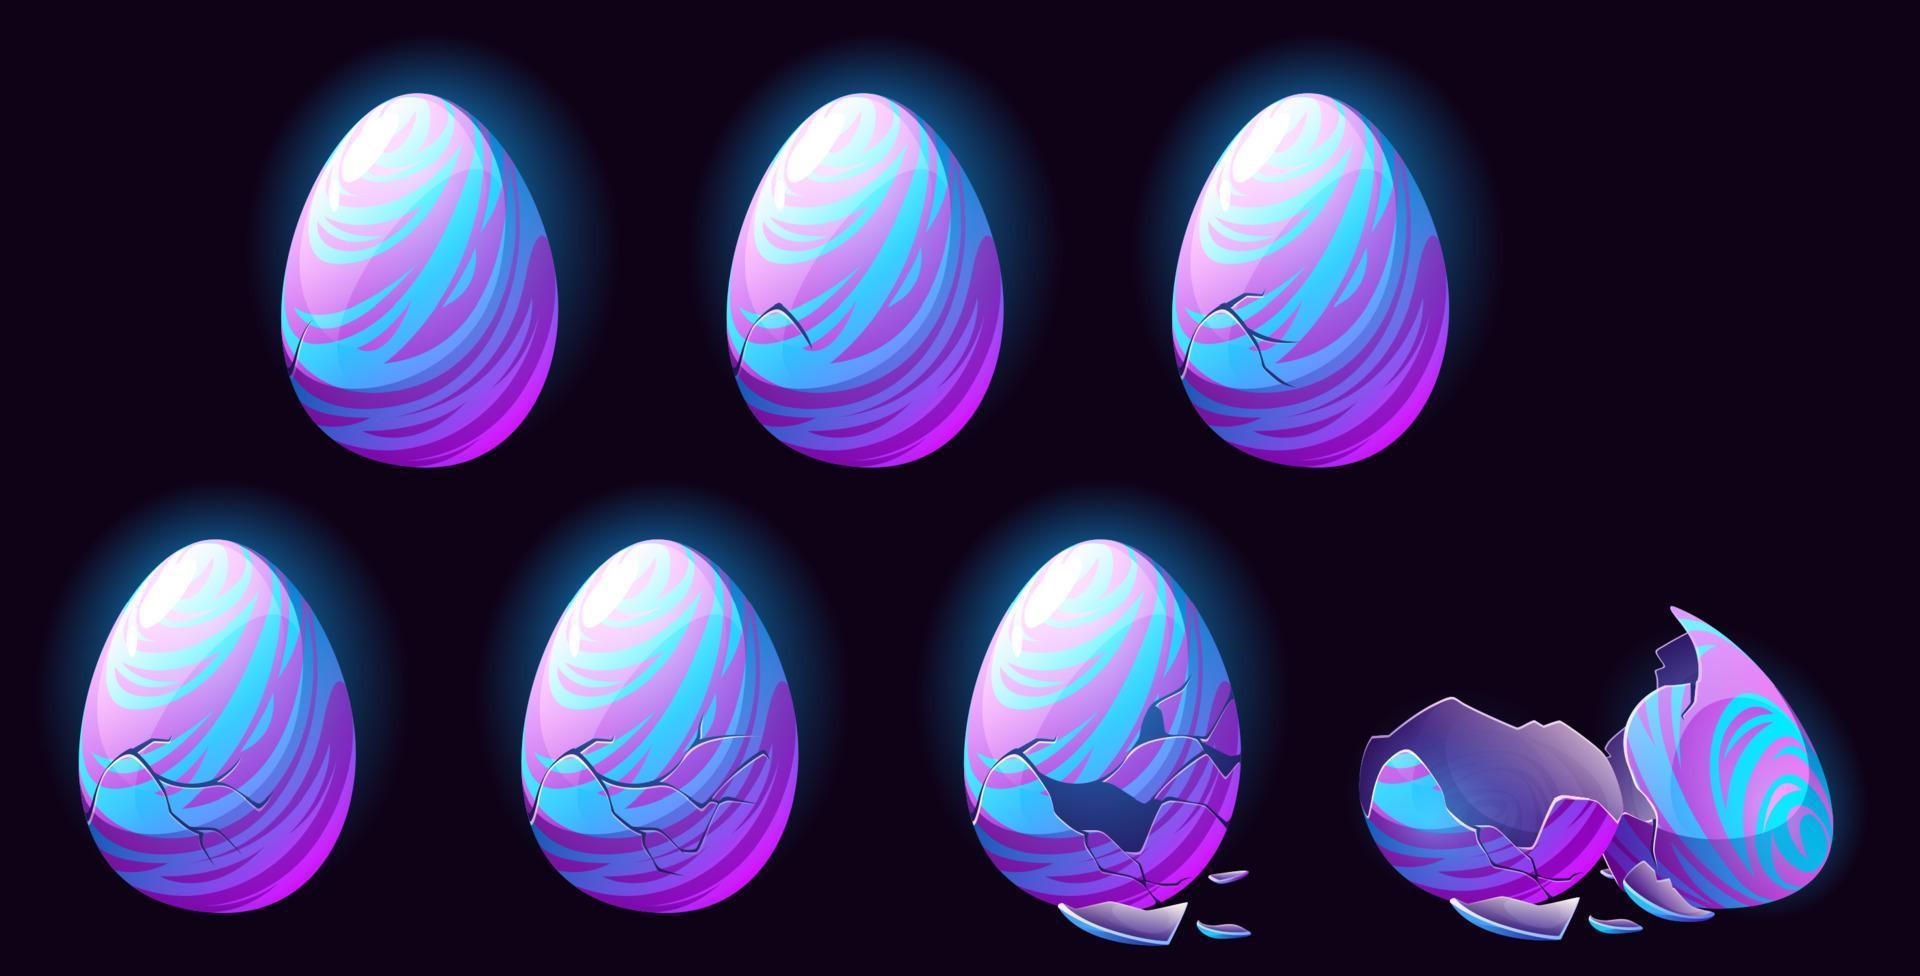 Fantasy dragon eggs in different steps of break vector